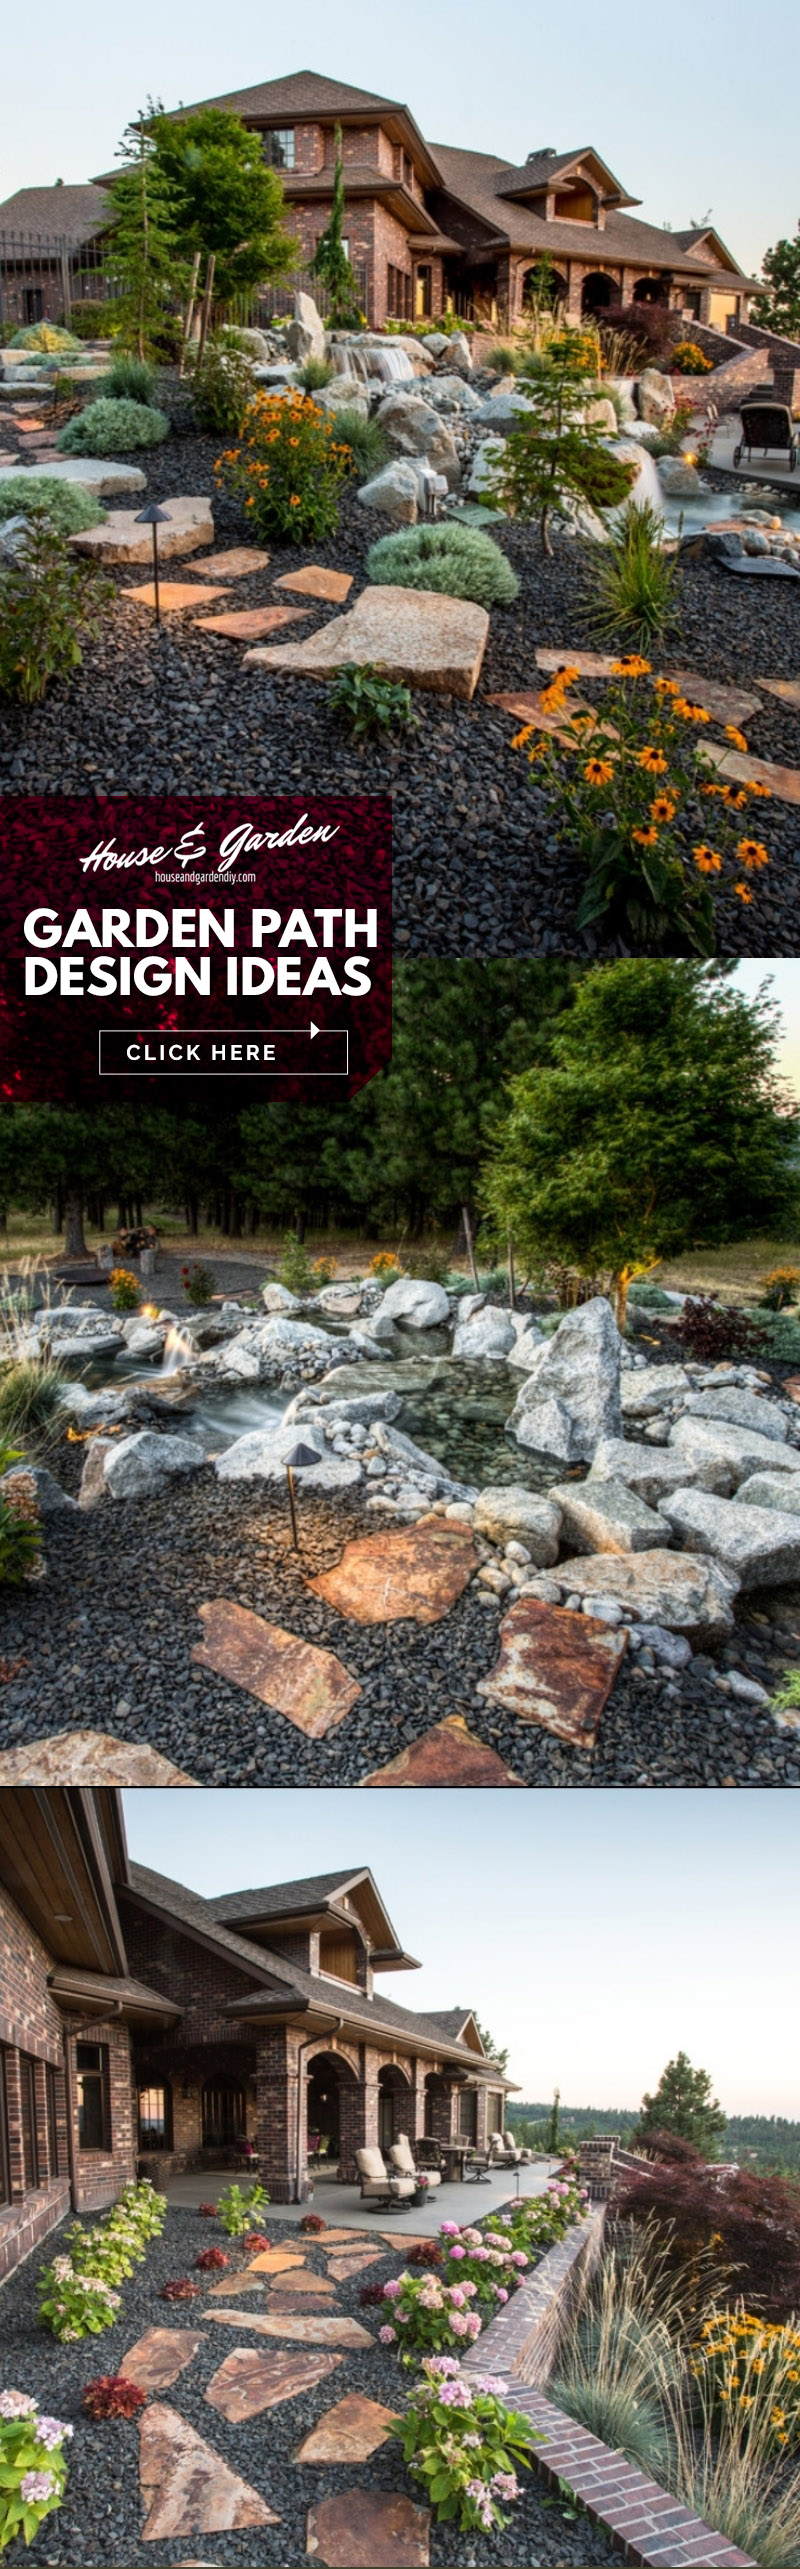 garden path ideas pinterest